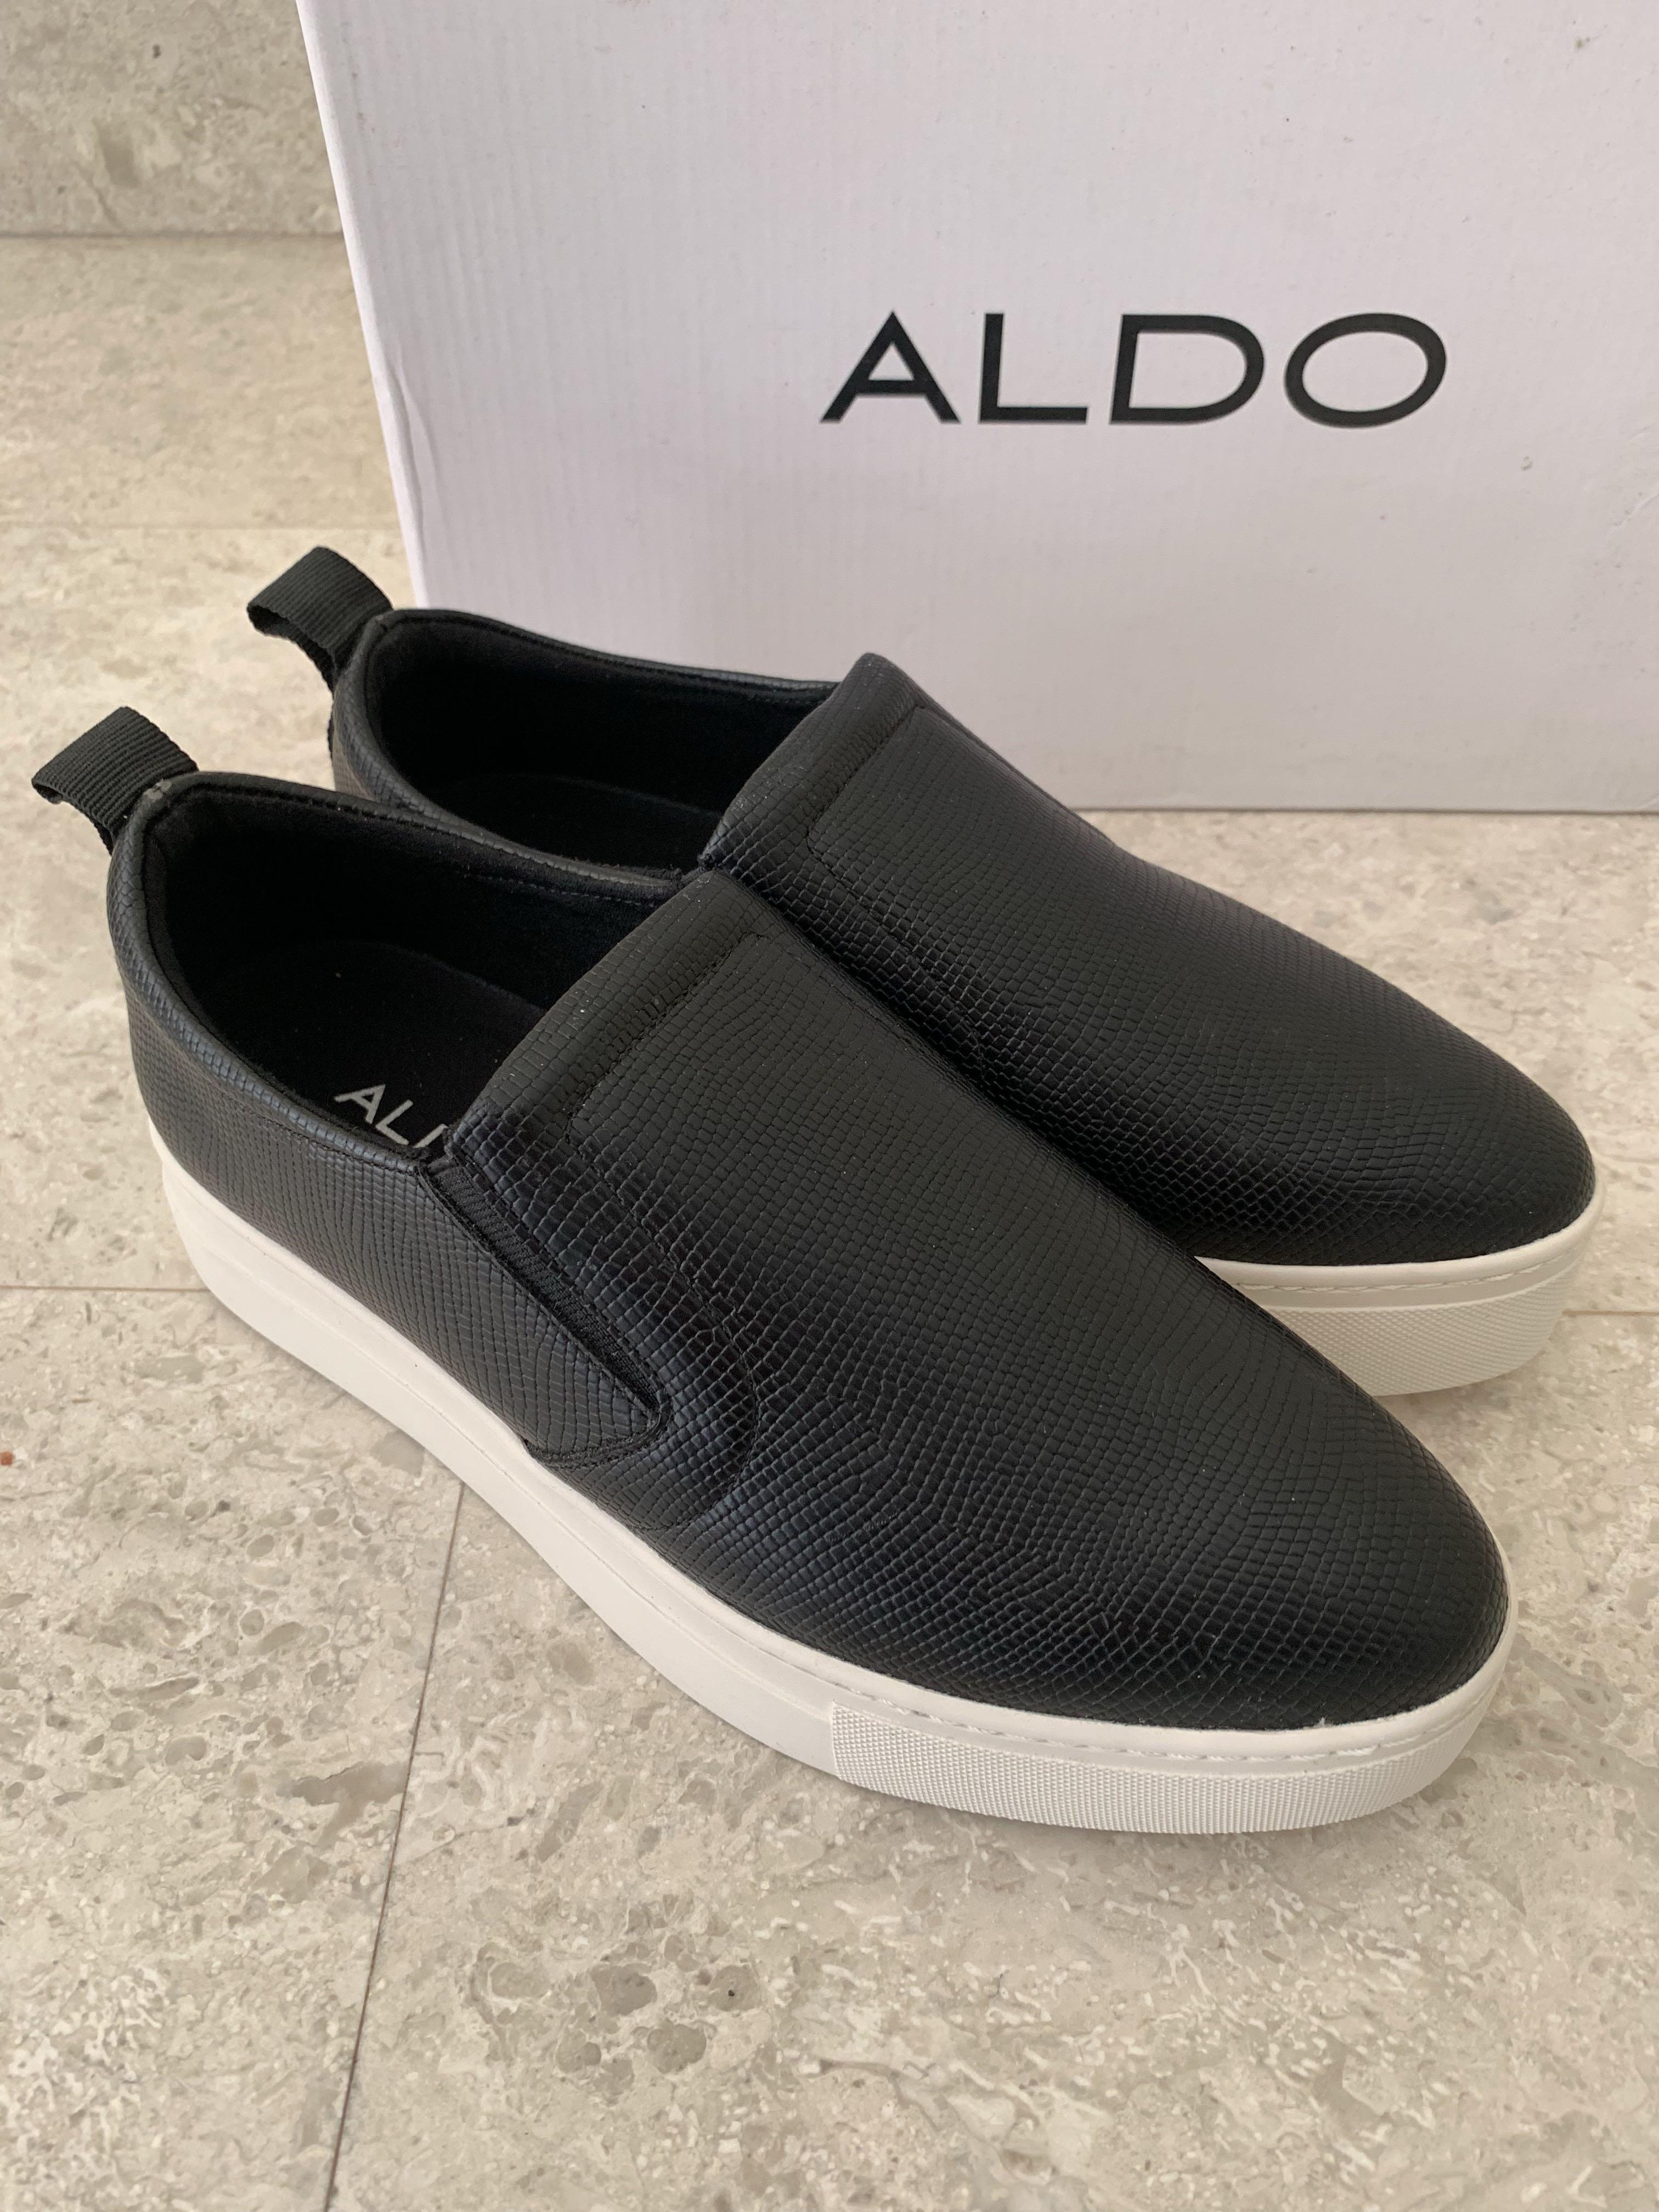 aldo black slip on shoes